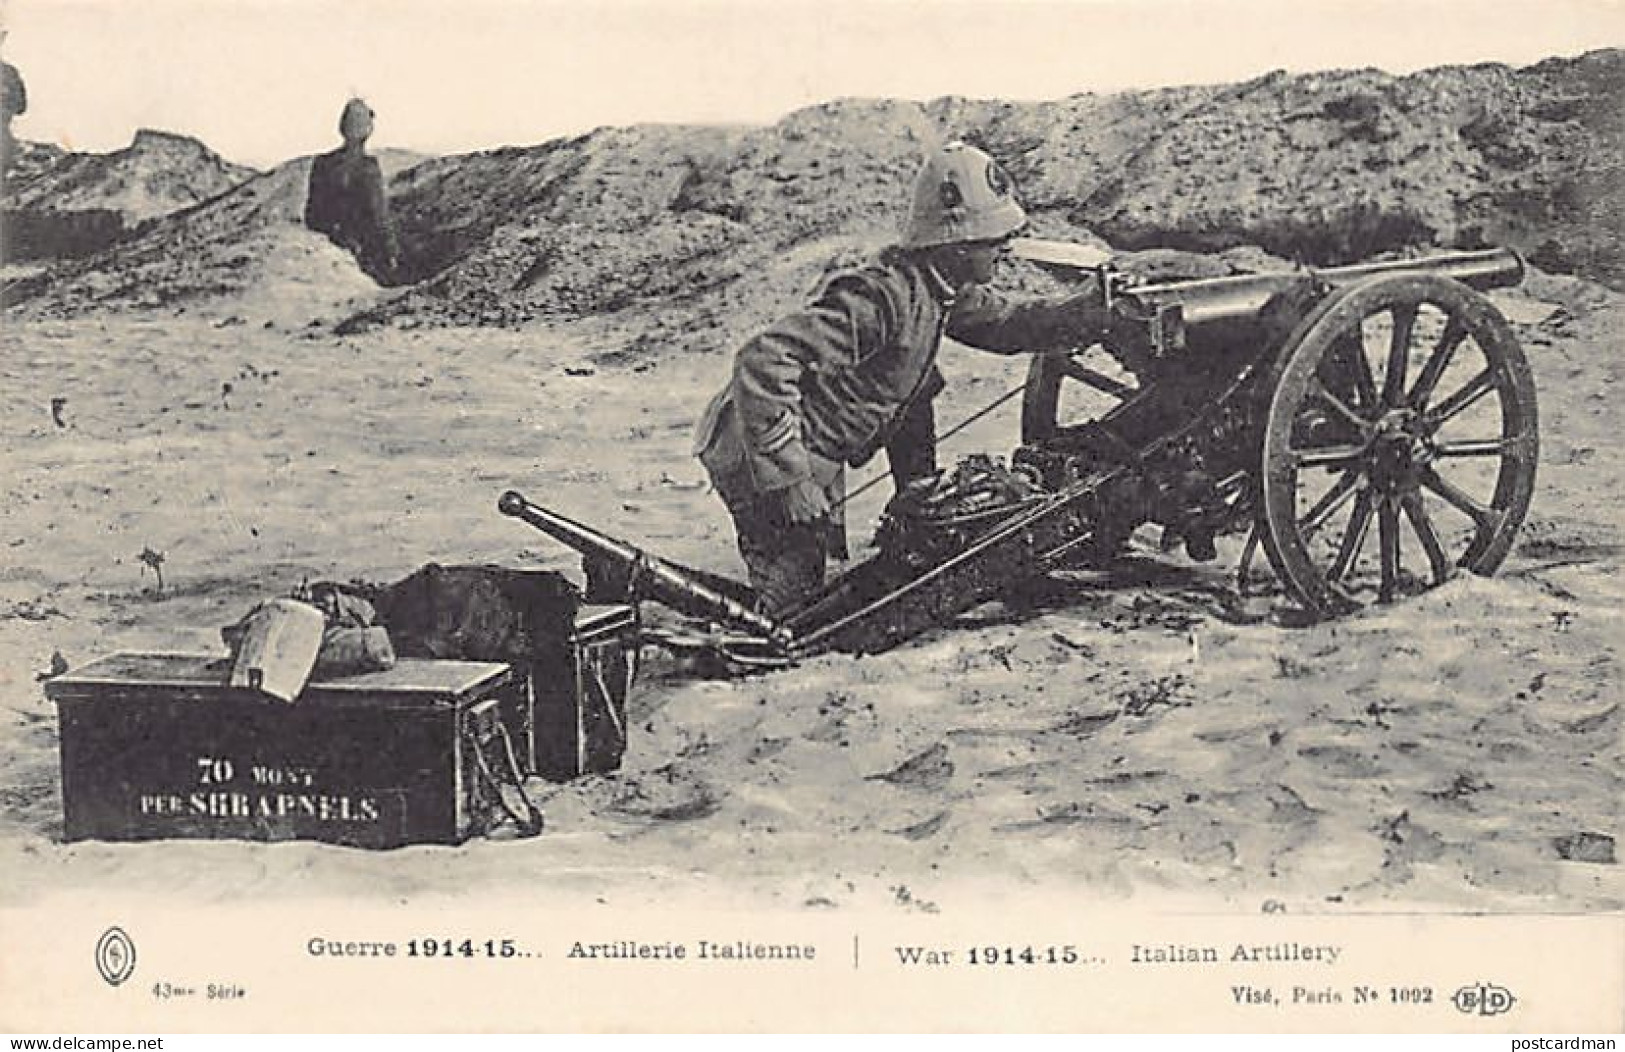 Libya - Italian Artillery - Libya